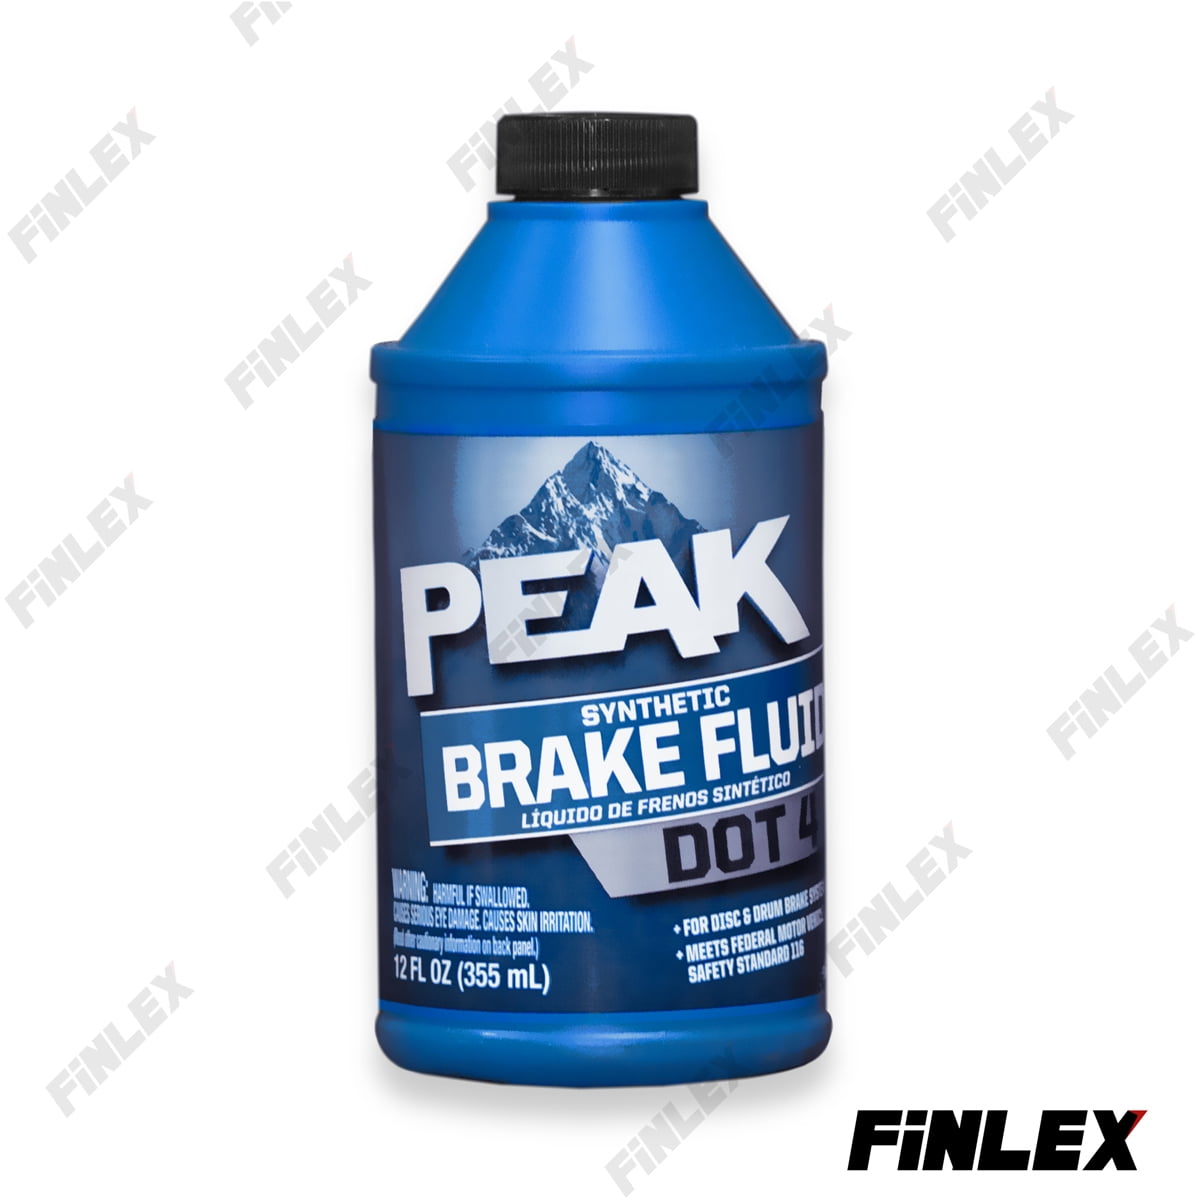 Dầu thắng dot 4 synthetic peak brake fluid